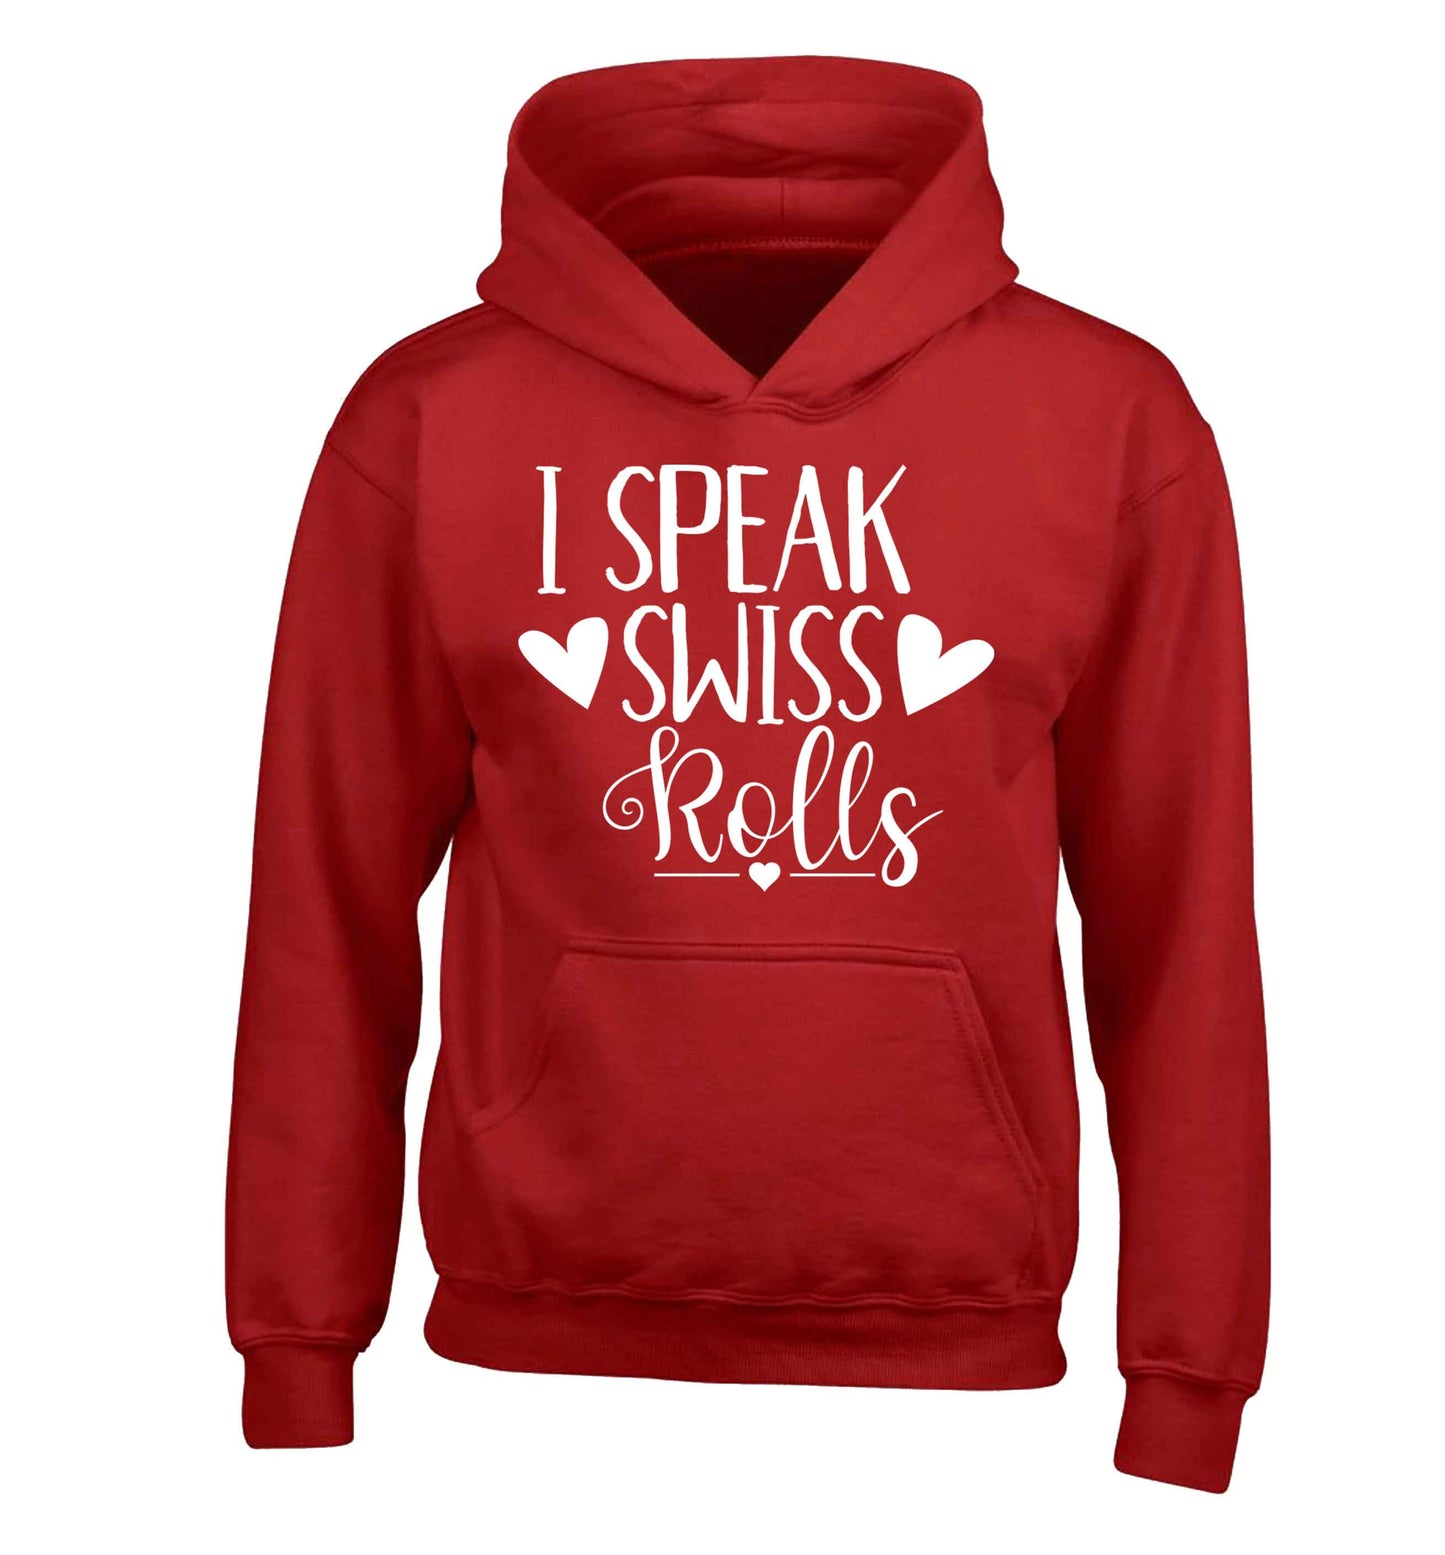 I speak swiss..rolls children's red hoodie 12-13 Years